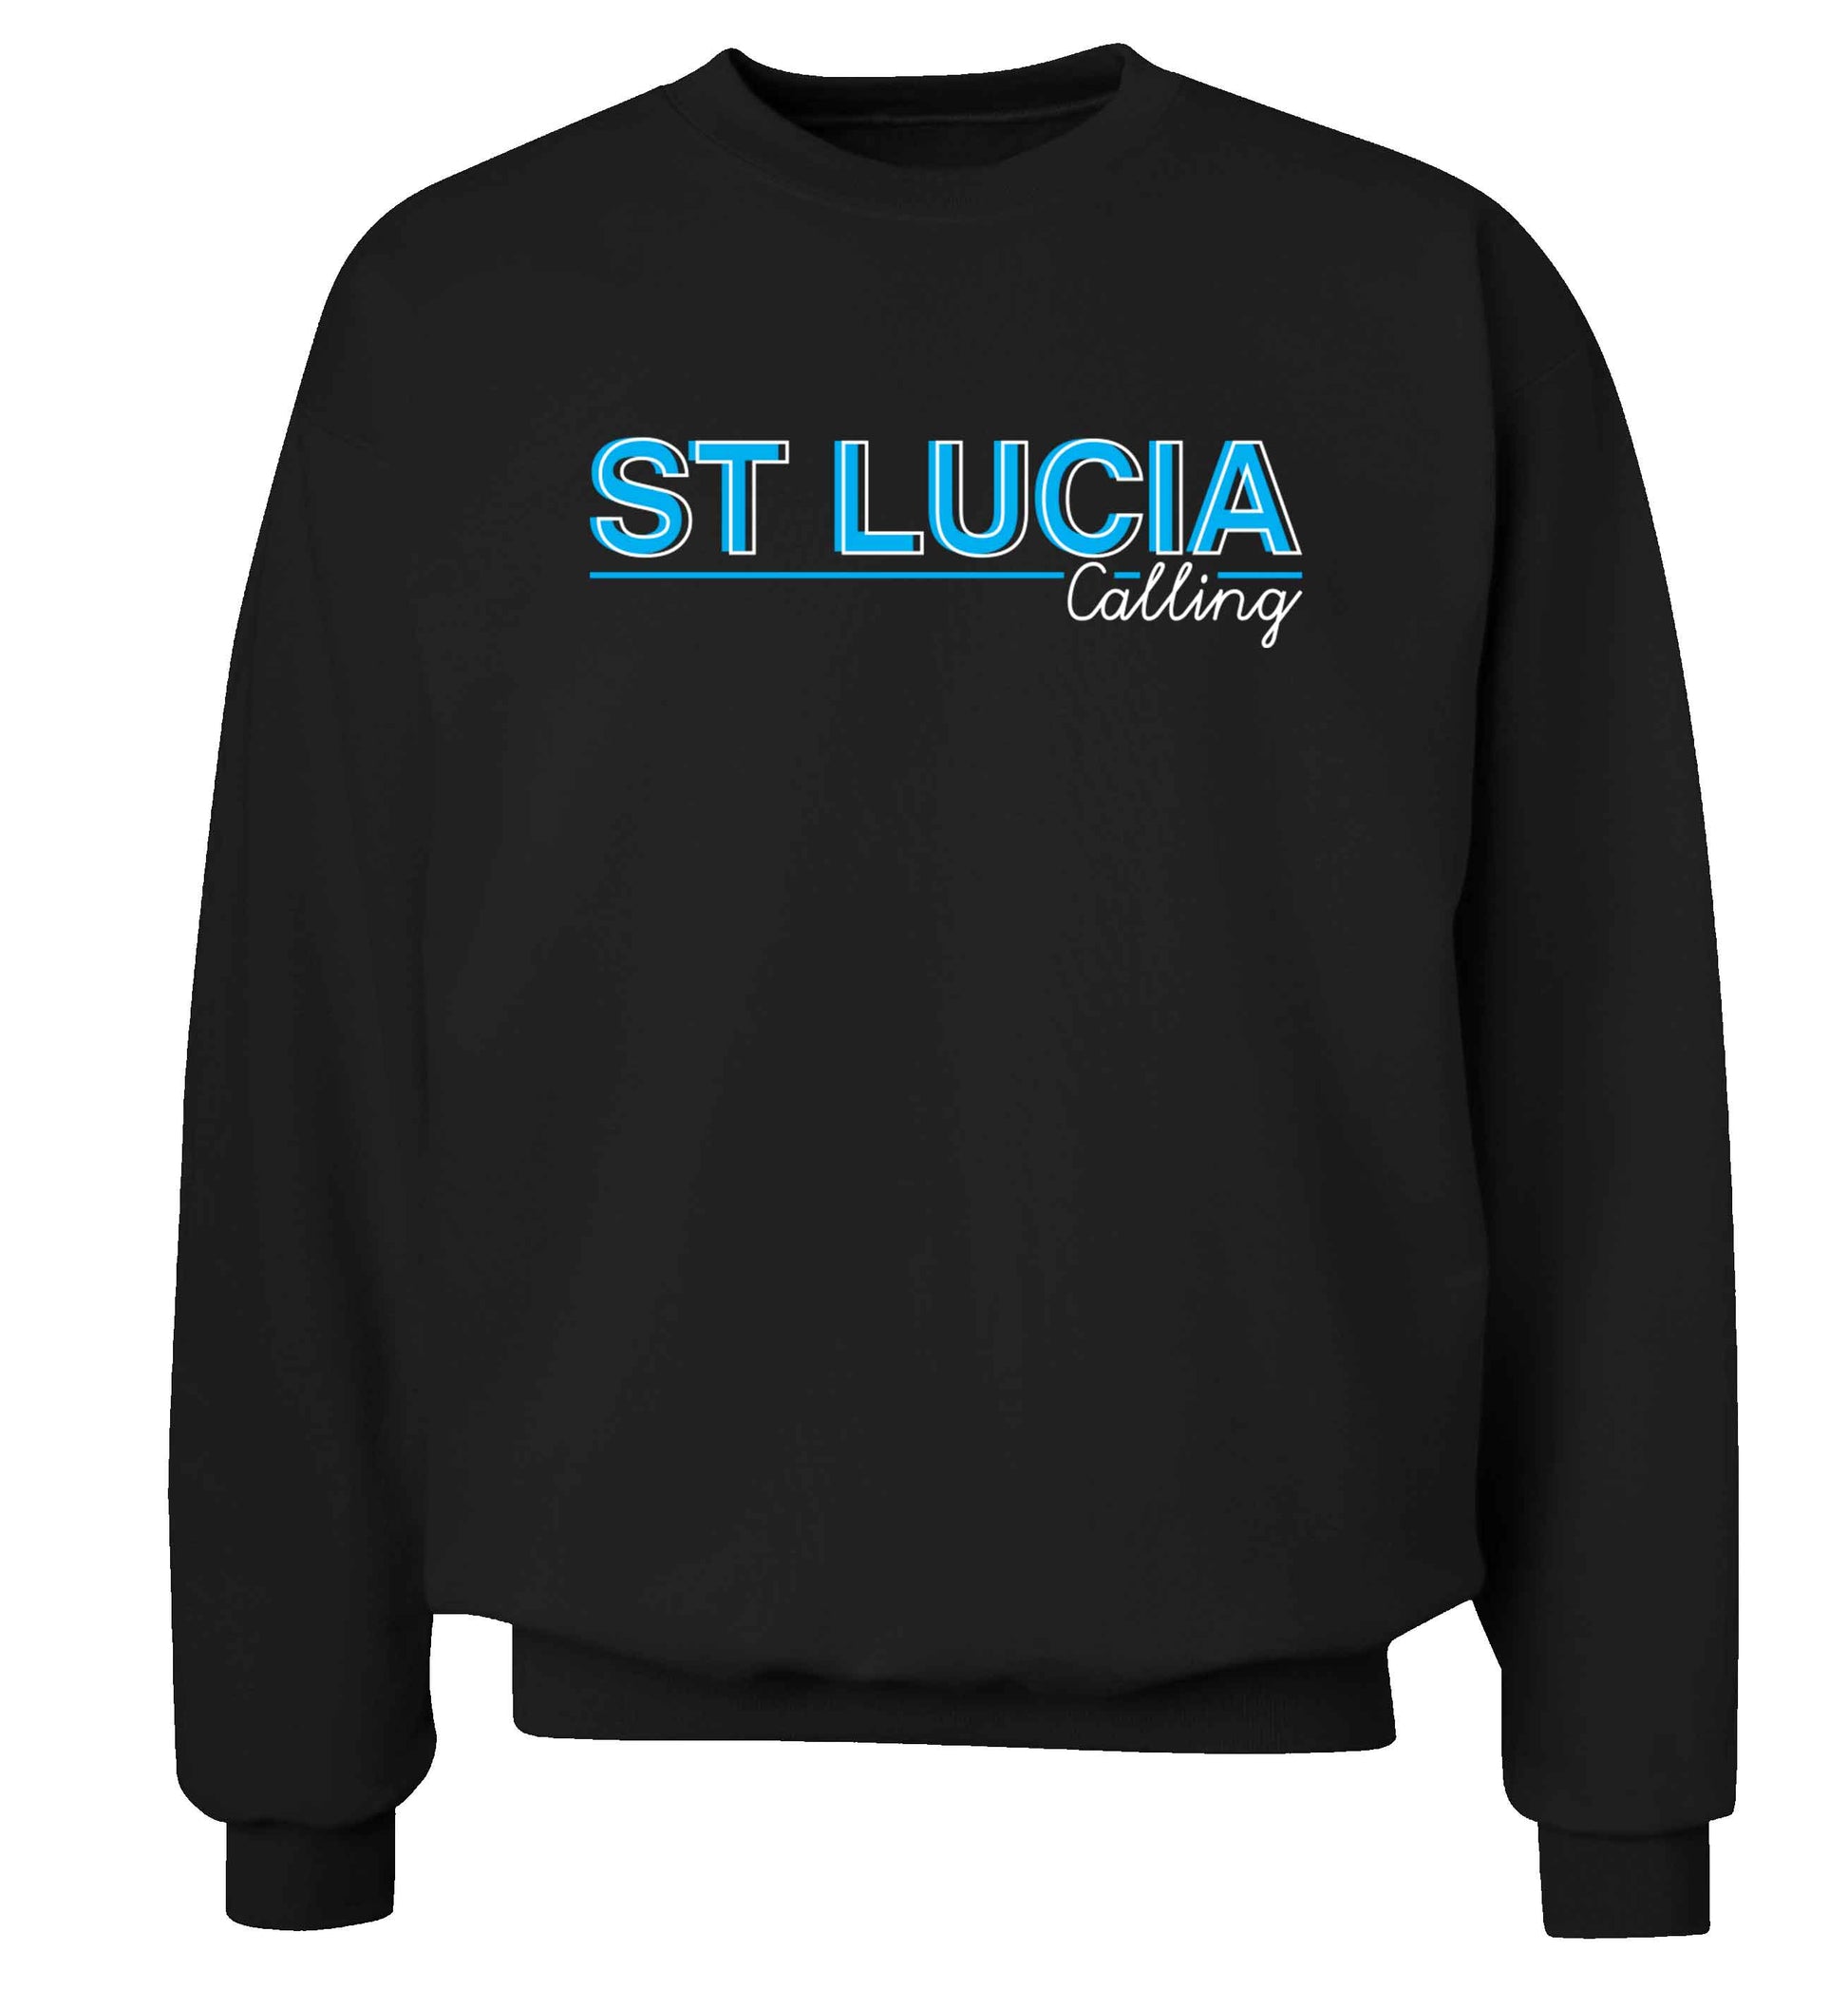 St Lucia calling Adult's unisex black Sweater 2XL